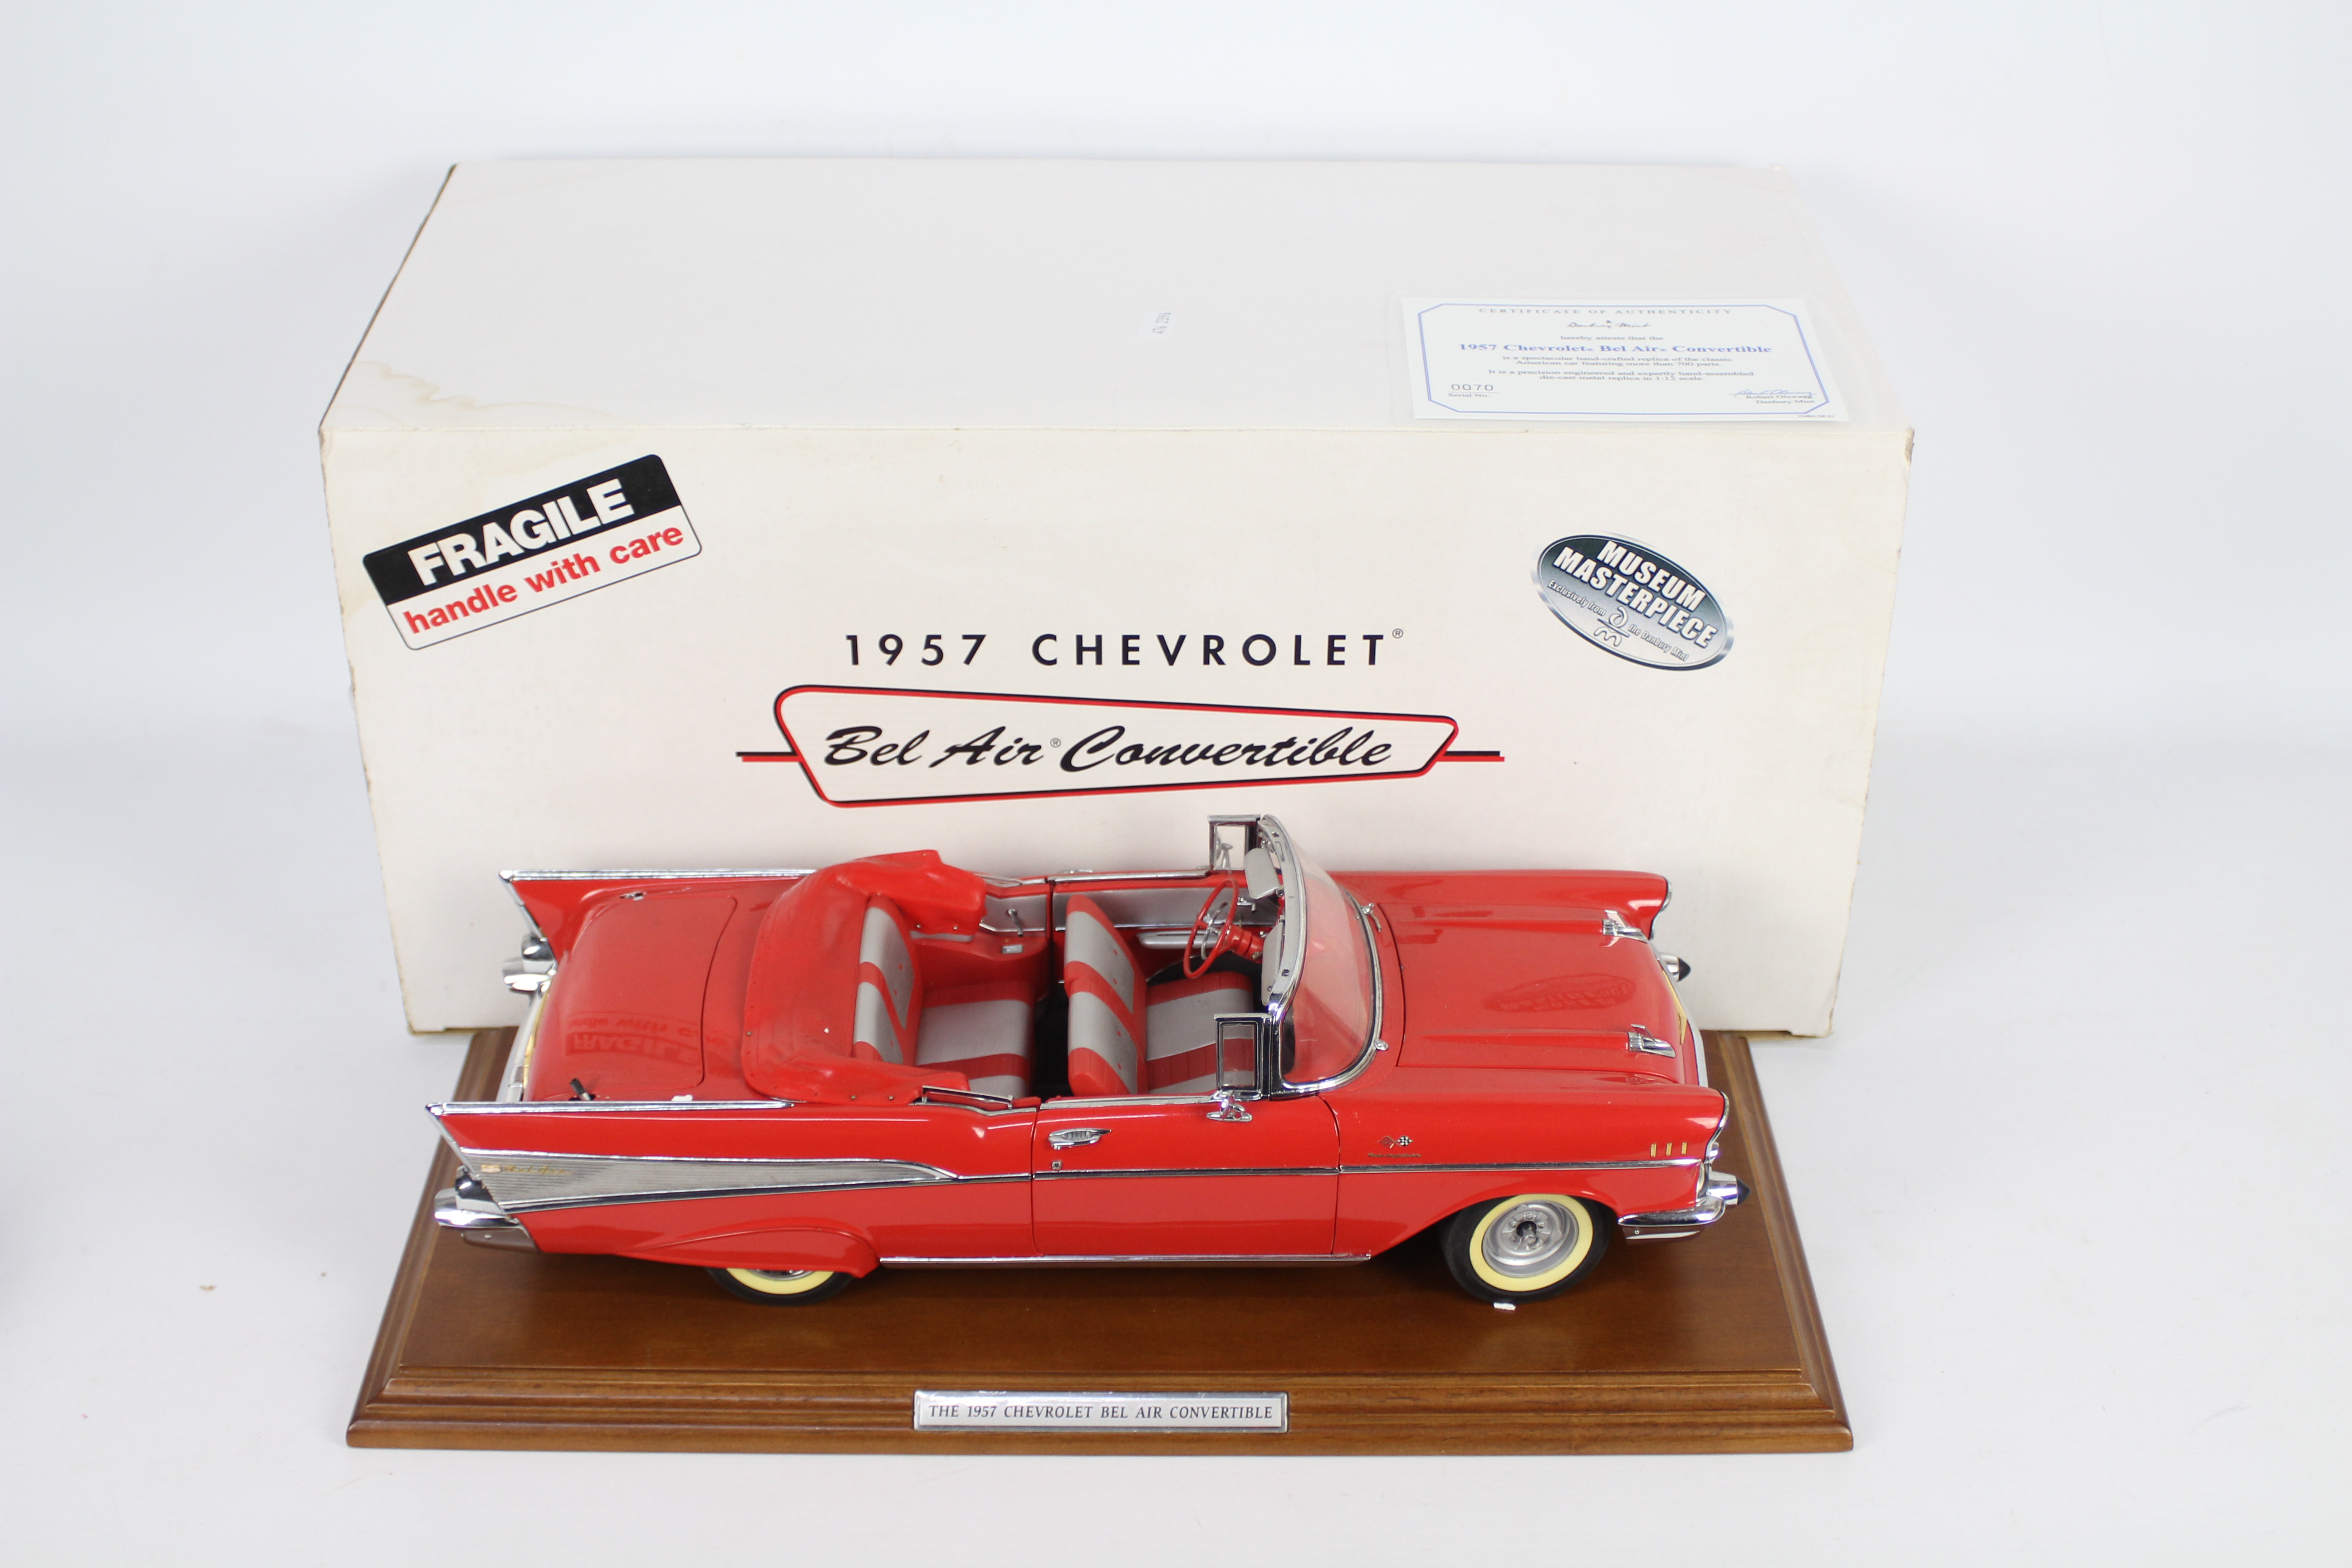 Danbury Mint - A boxed 1:12 scale 1957 Chevrolet Bel Air Convertible by Danbury Mint.